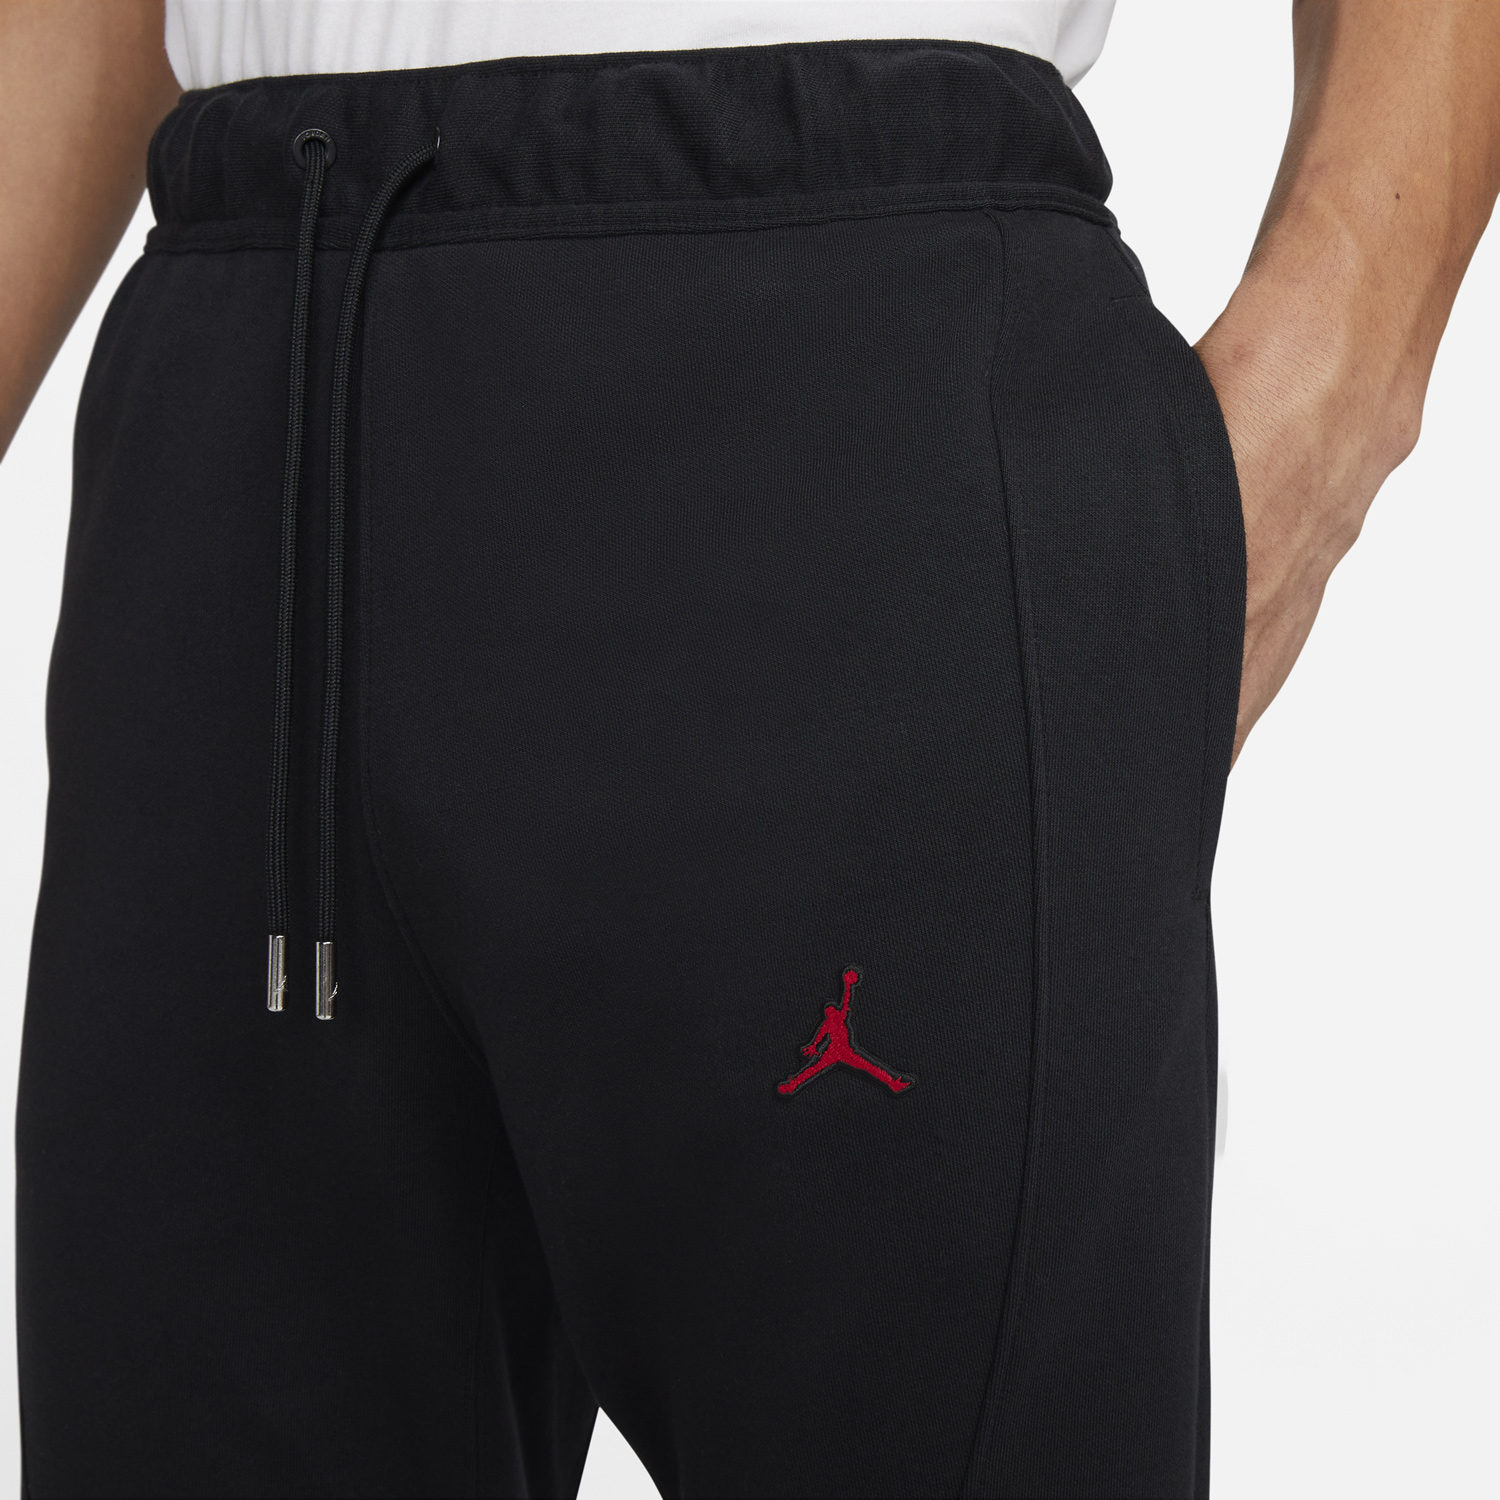 jordan-essential-warmup-pants-black-red-2